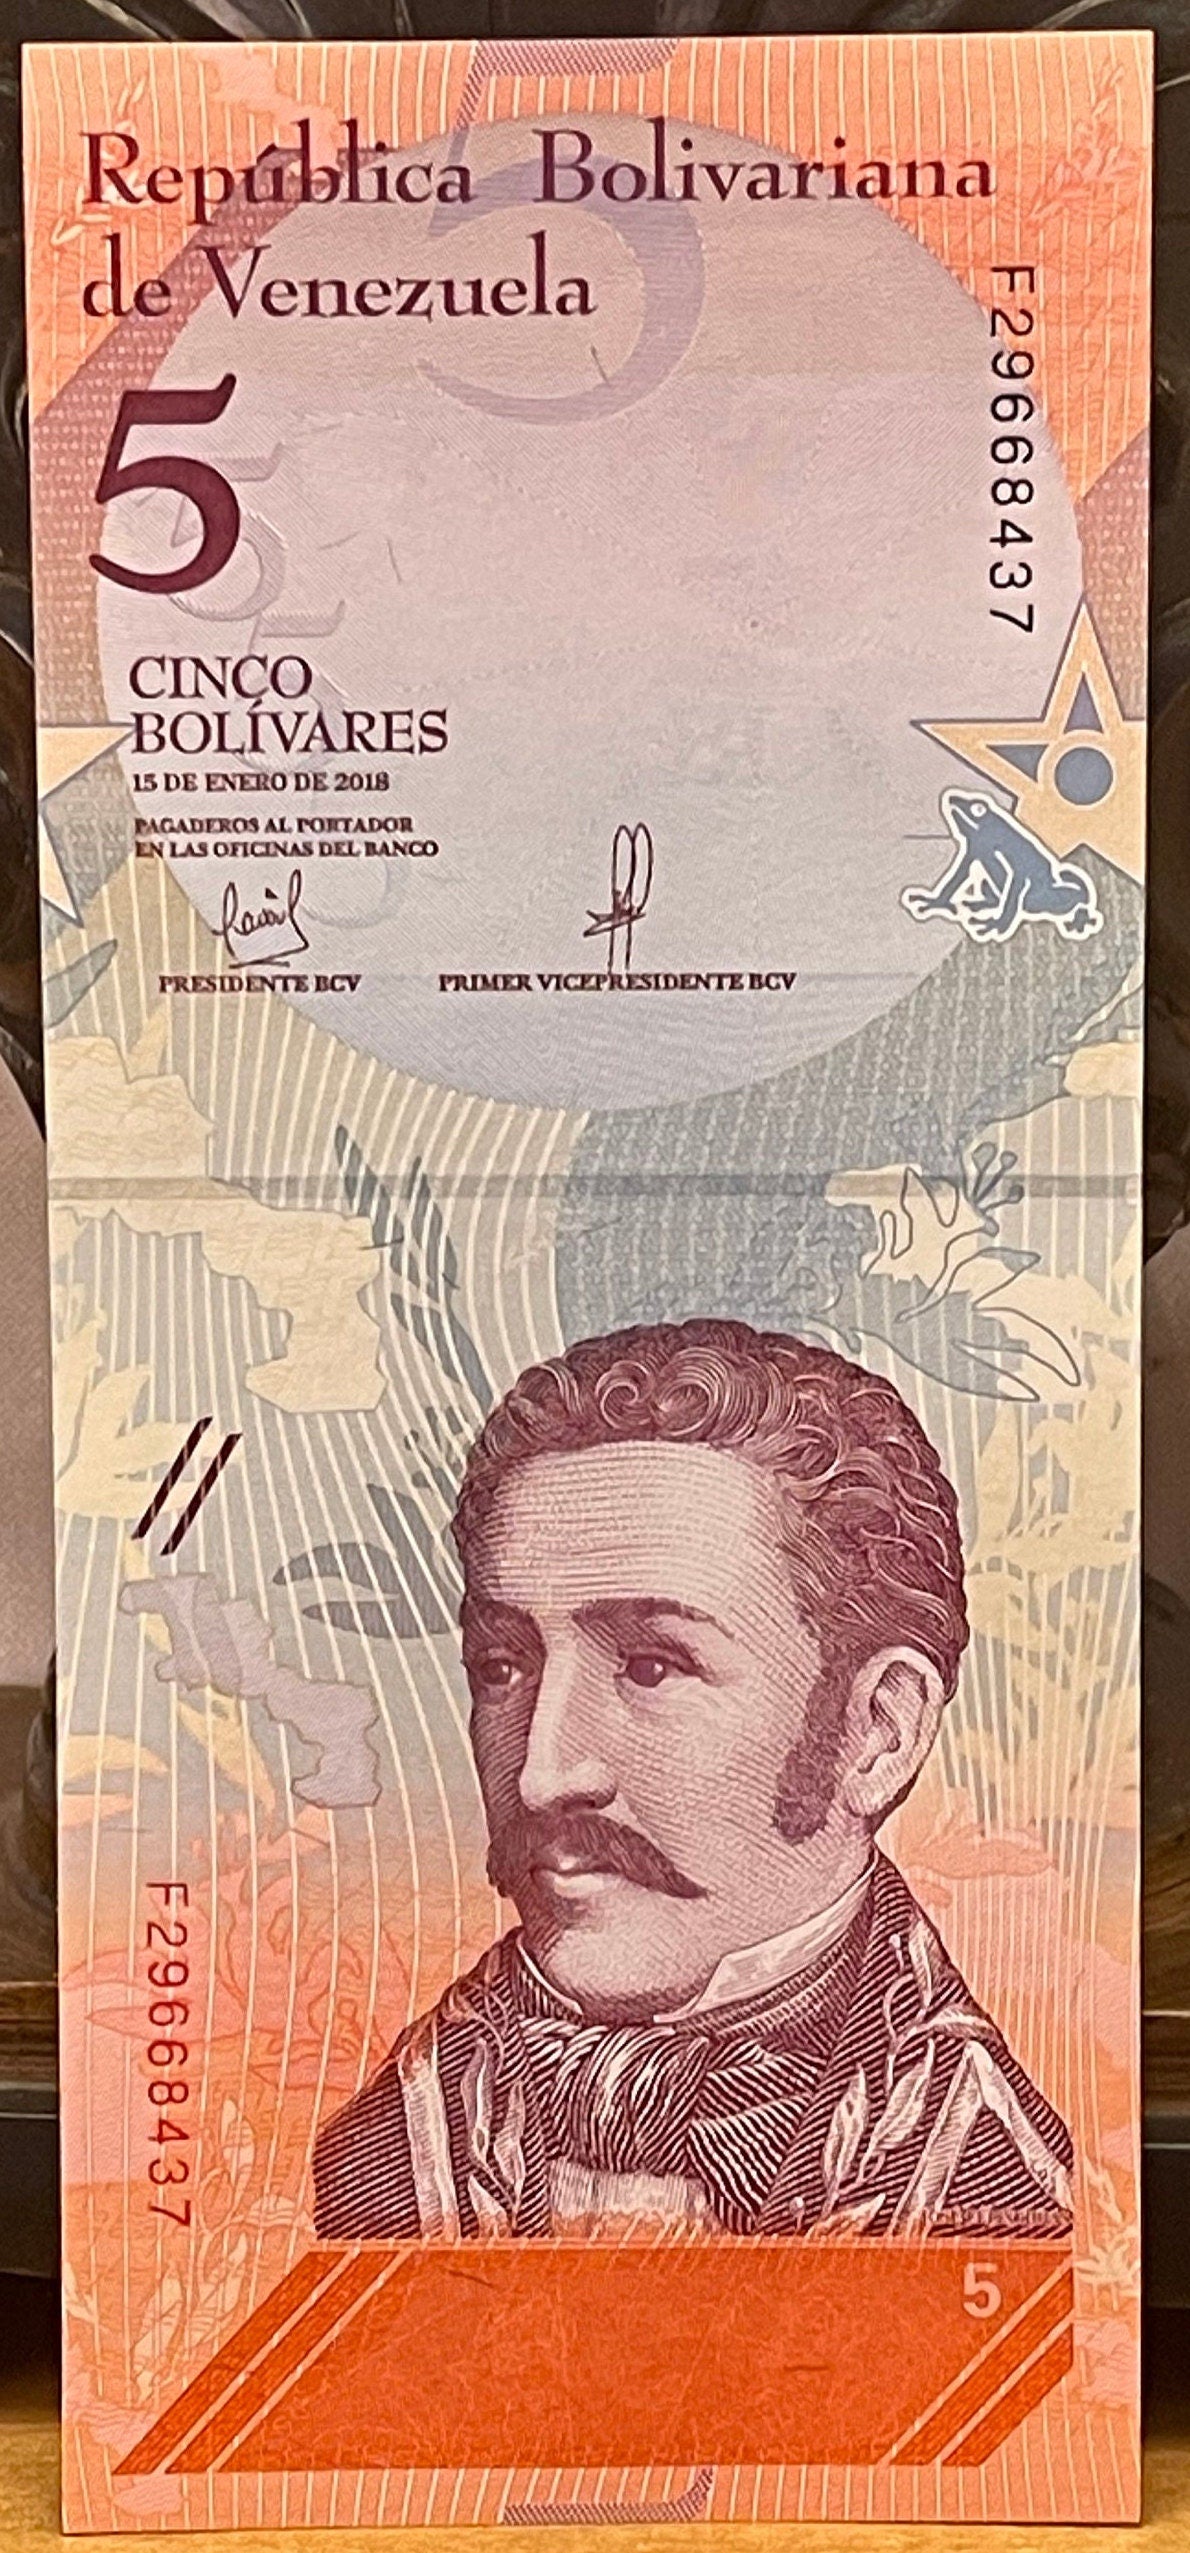 Veragua Stubfoot Toad & Revolutionary Martyr Jose Felix Ribas 5 Bolívares Venezuela Authentic Banknote Money for Collage (Harlequin Frog)